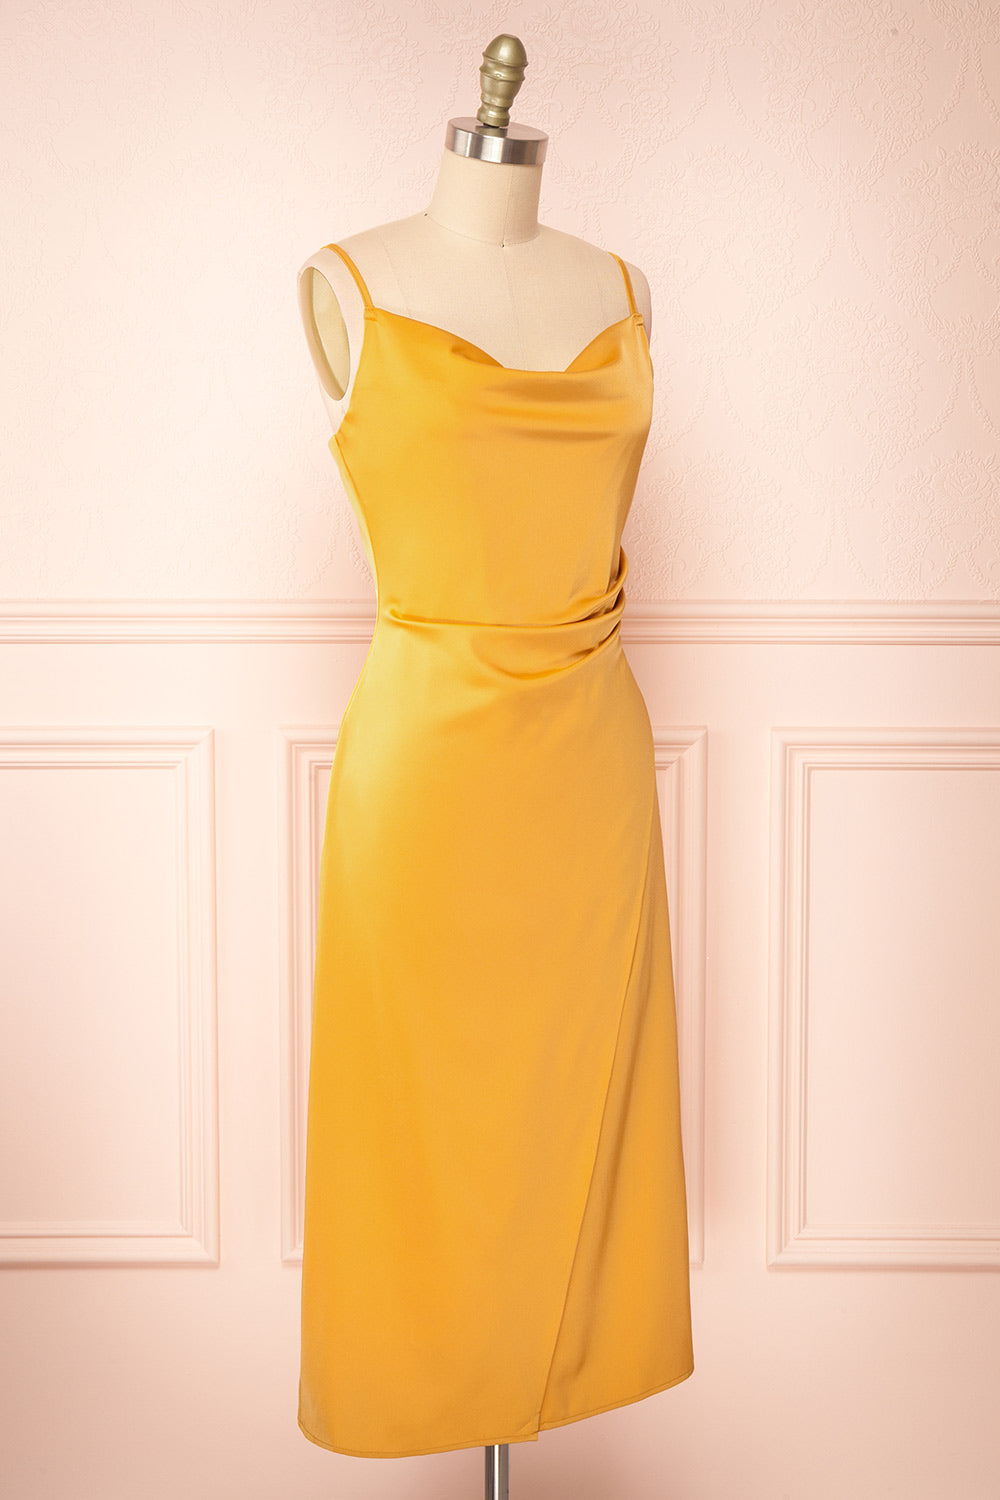 Chloe Yellow Cowl Neck Satin Midi Slip Dress | Boutique 1861 side view 